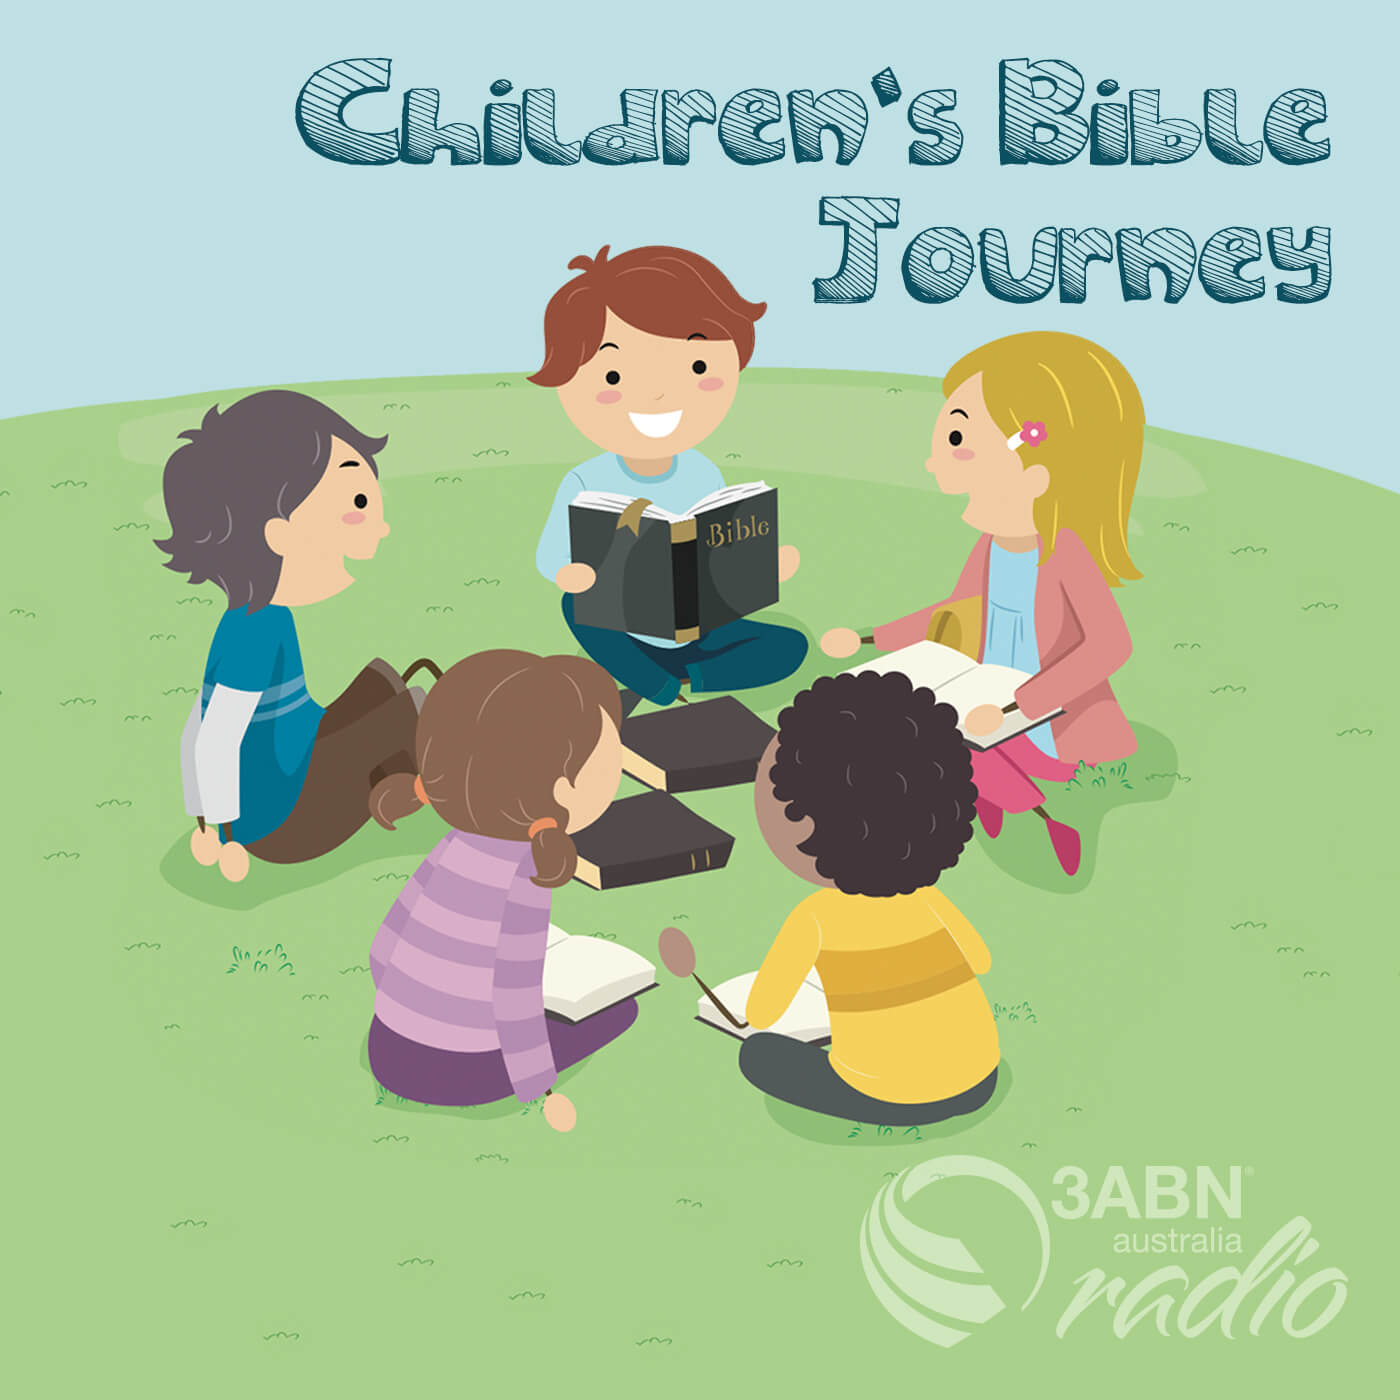 Children's Bible Journey - 2168